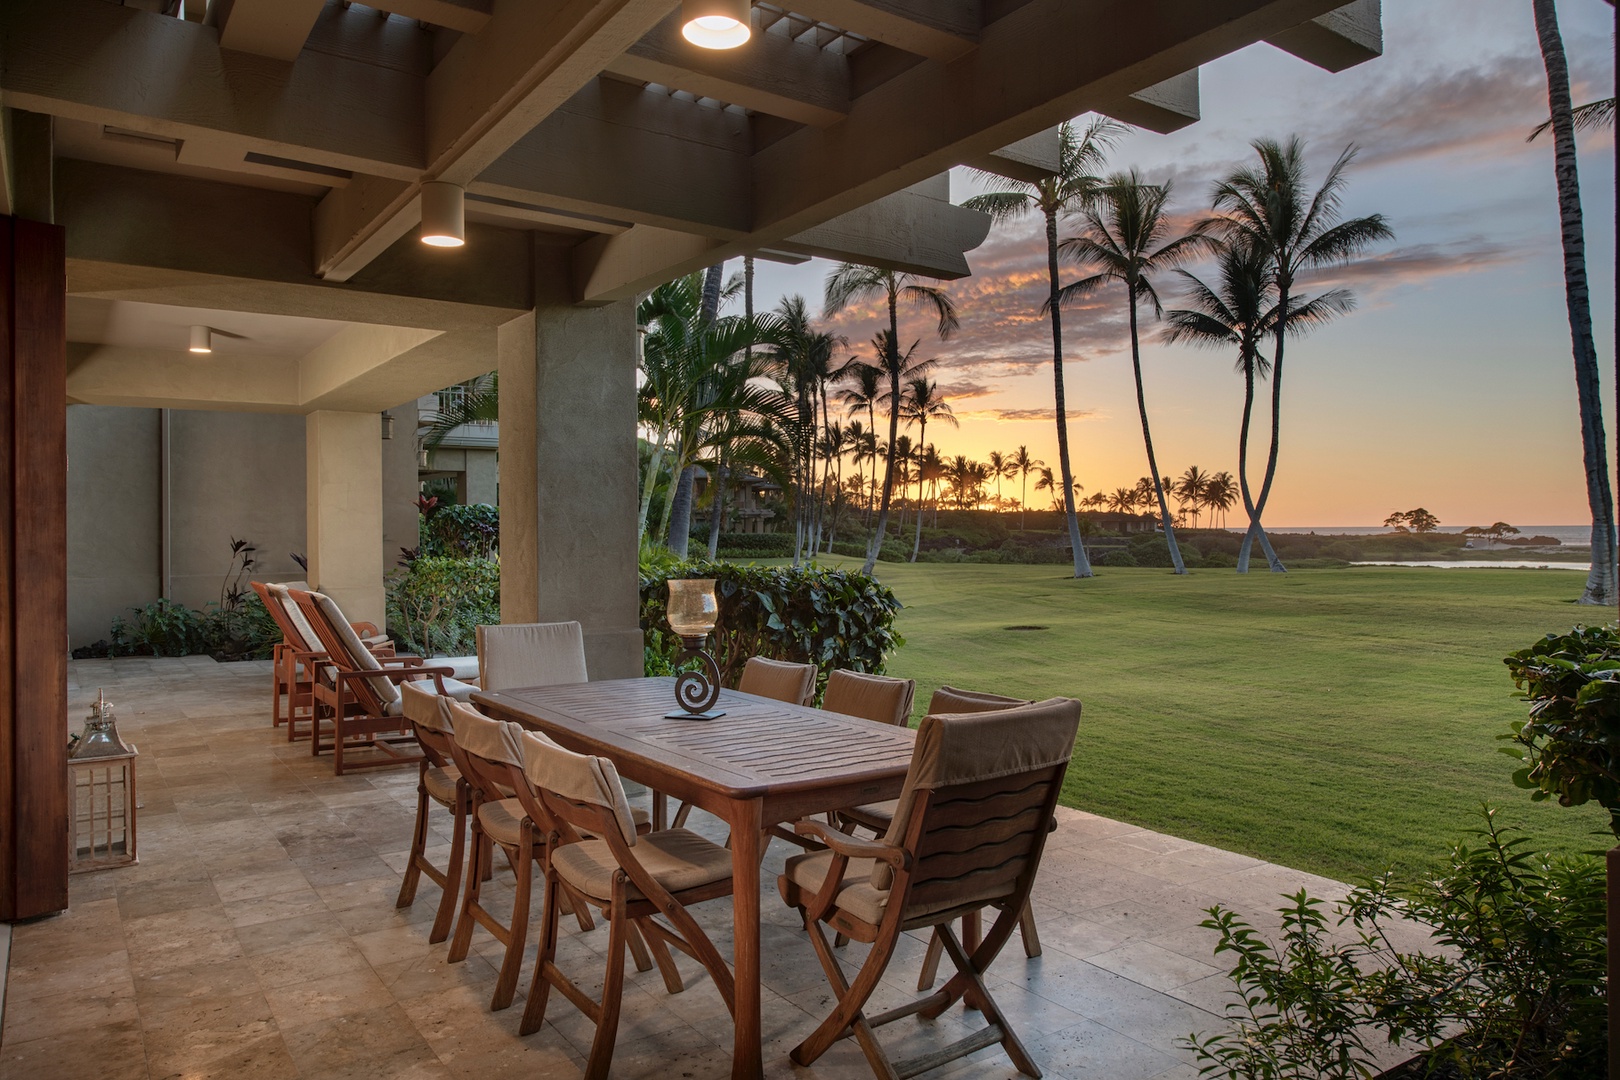 Kailua Kona Vacation Rentals, 3BD Golf Villa (3101) at Four Seasons Resort at Hualalai - Wide view of lanai seating at sunset, with dining table and loungers beyond.